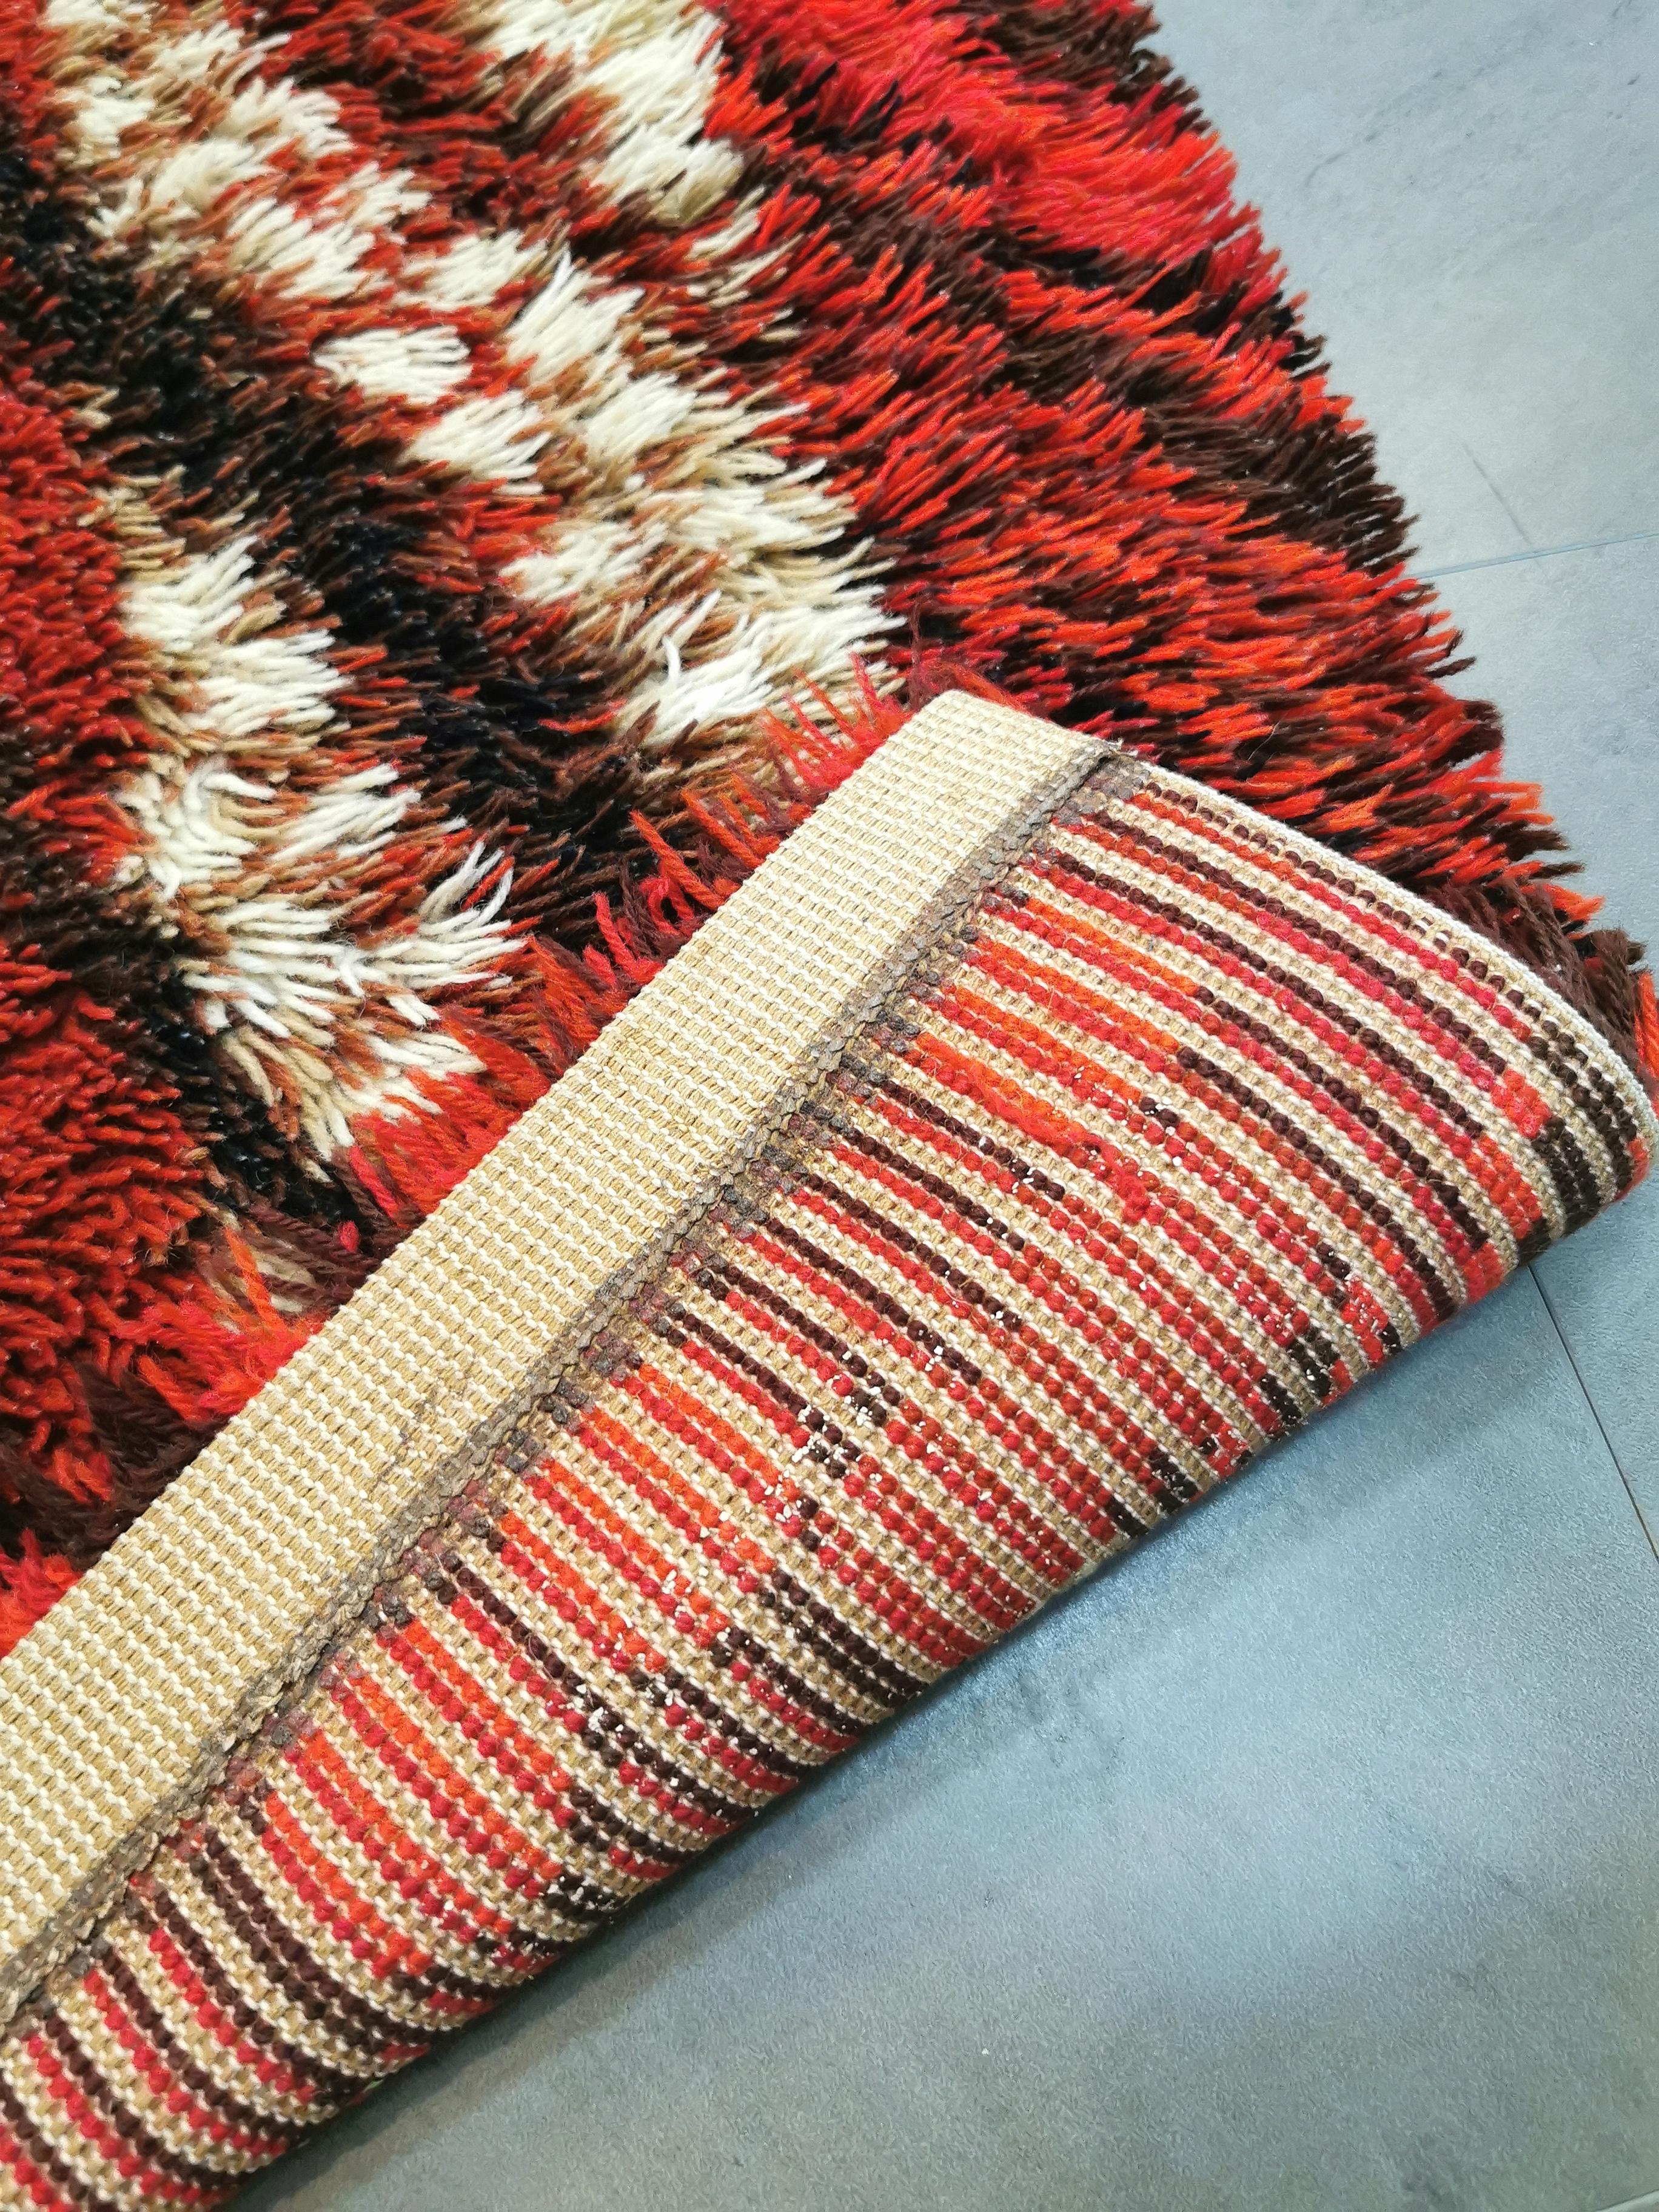 Midcentury Wool Red Black Large Carpet Rya Rug by Marianne Richter Sweden 1960s For Sale 3